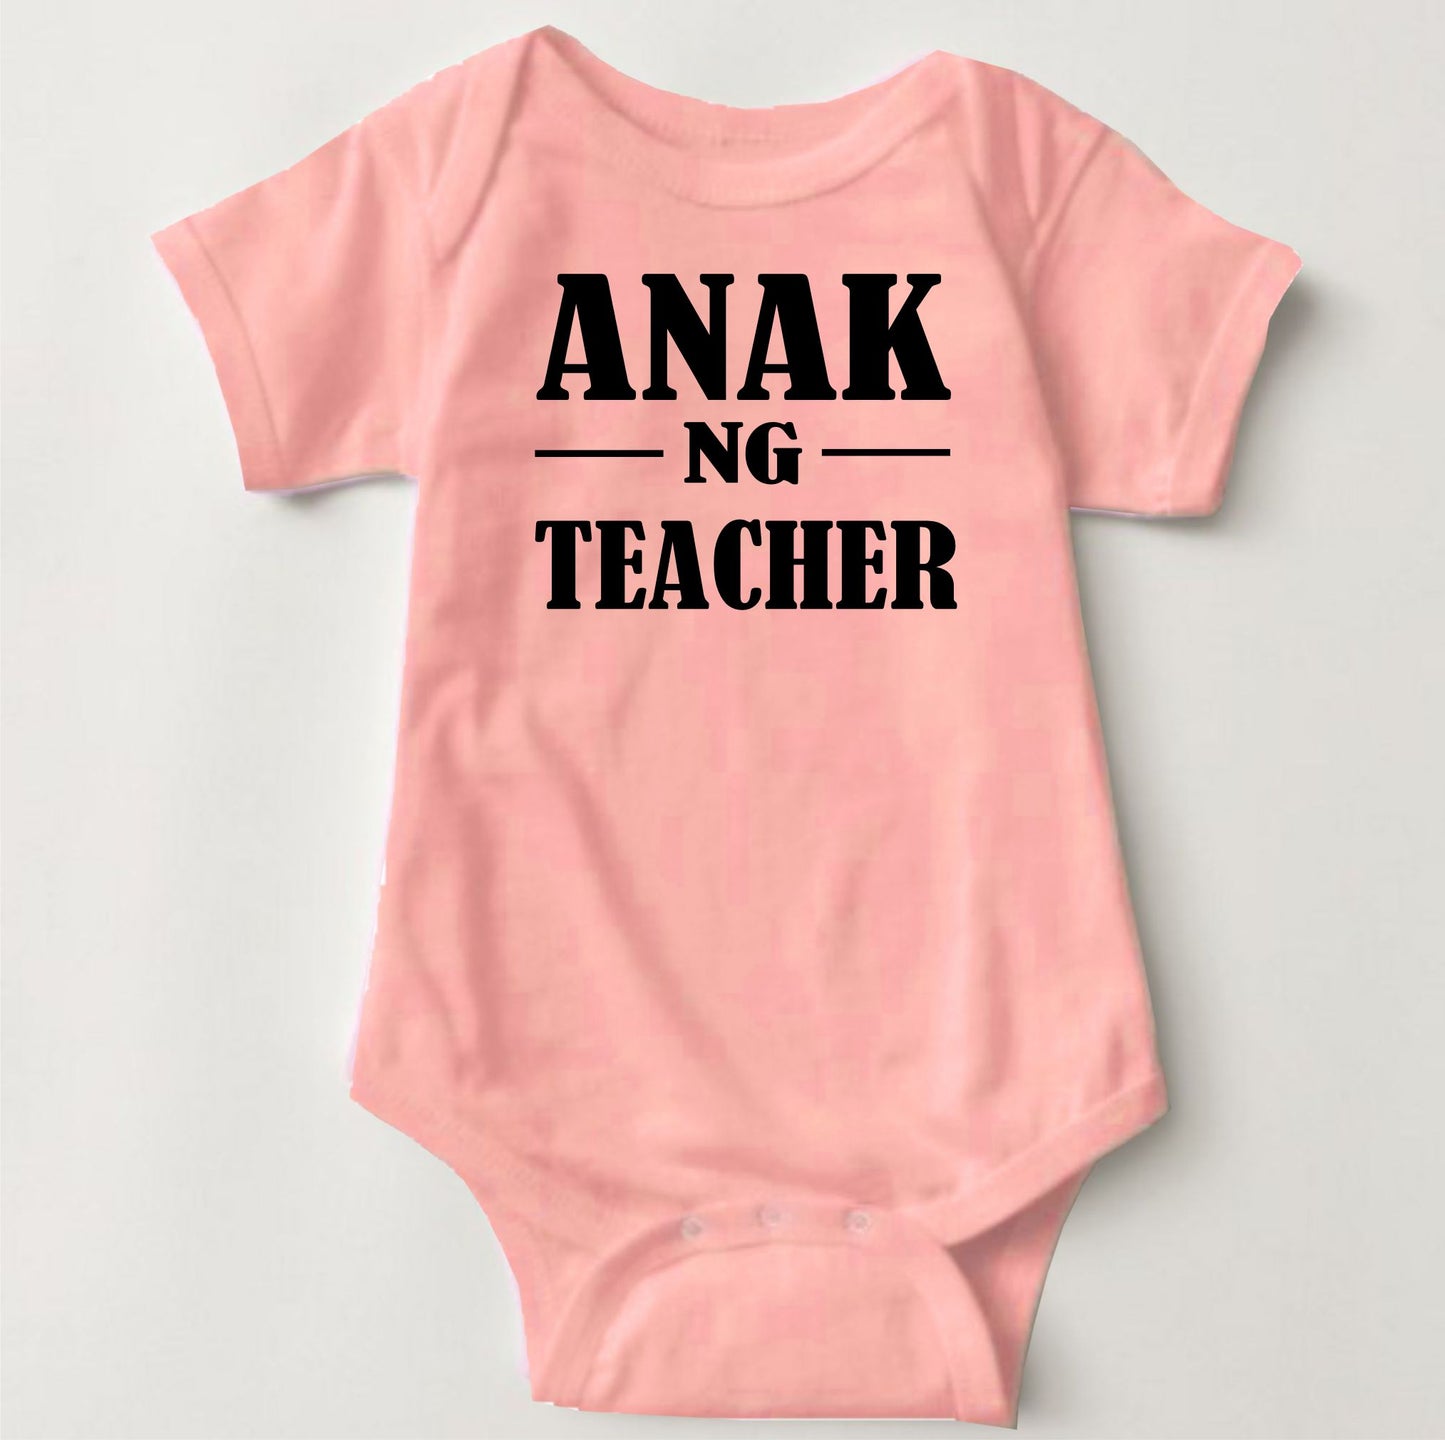 Baby Statement Onesies - Anak ng Teacher